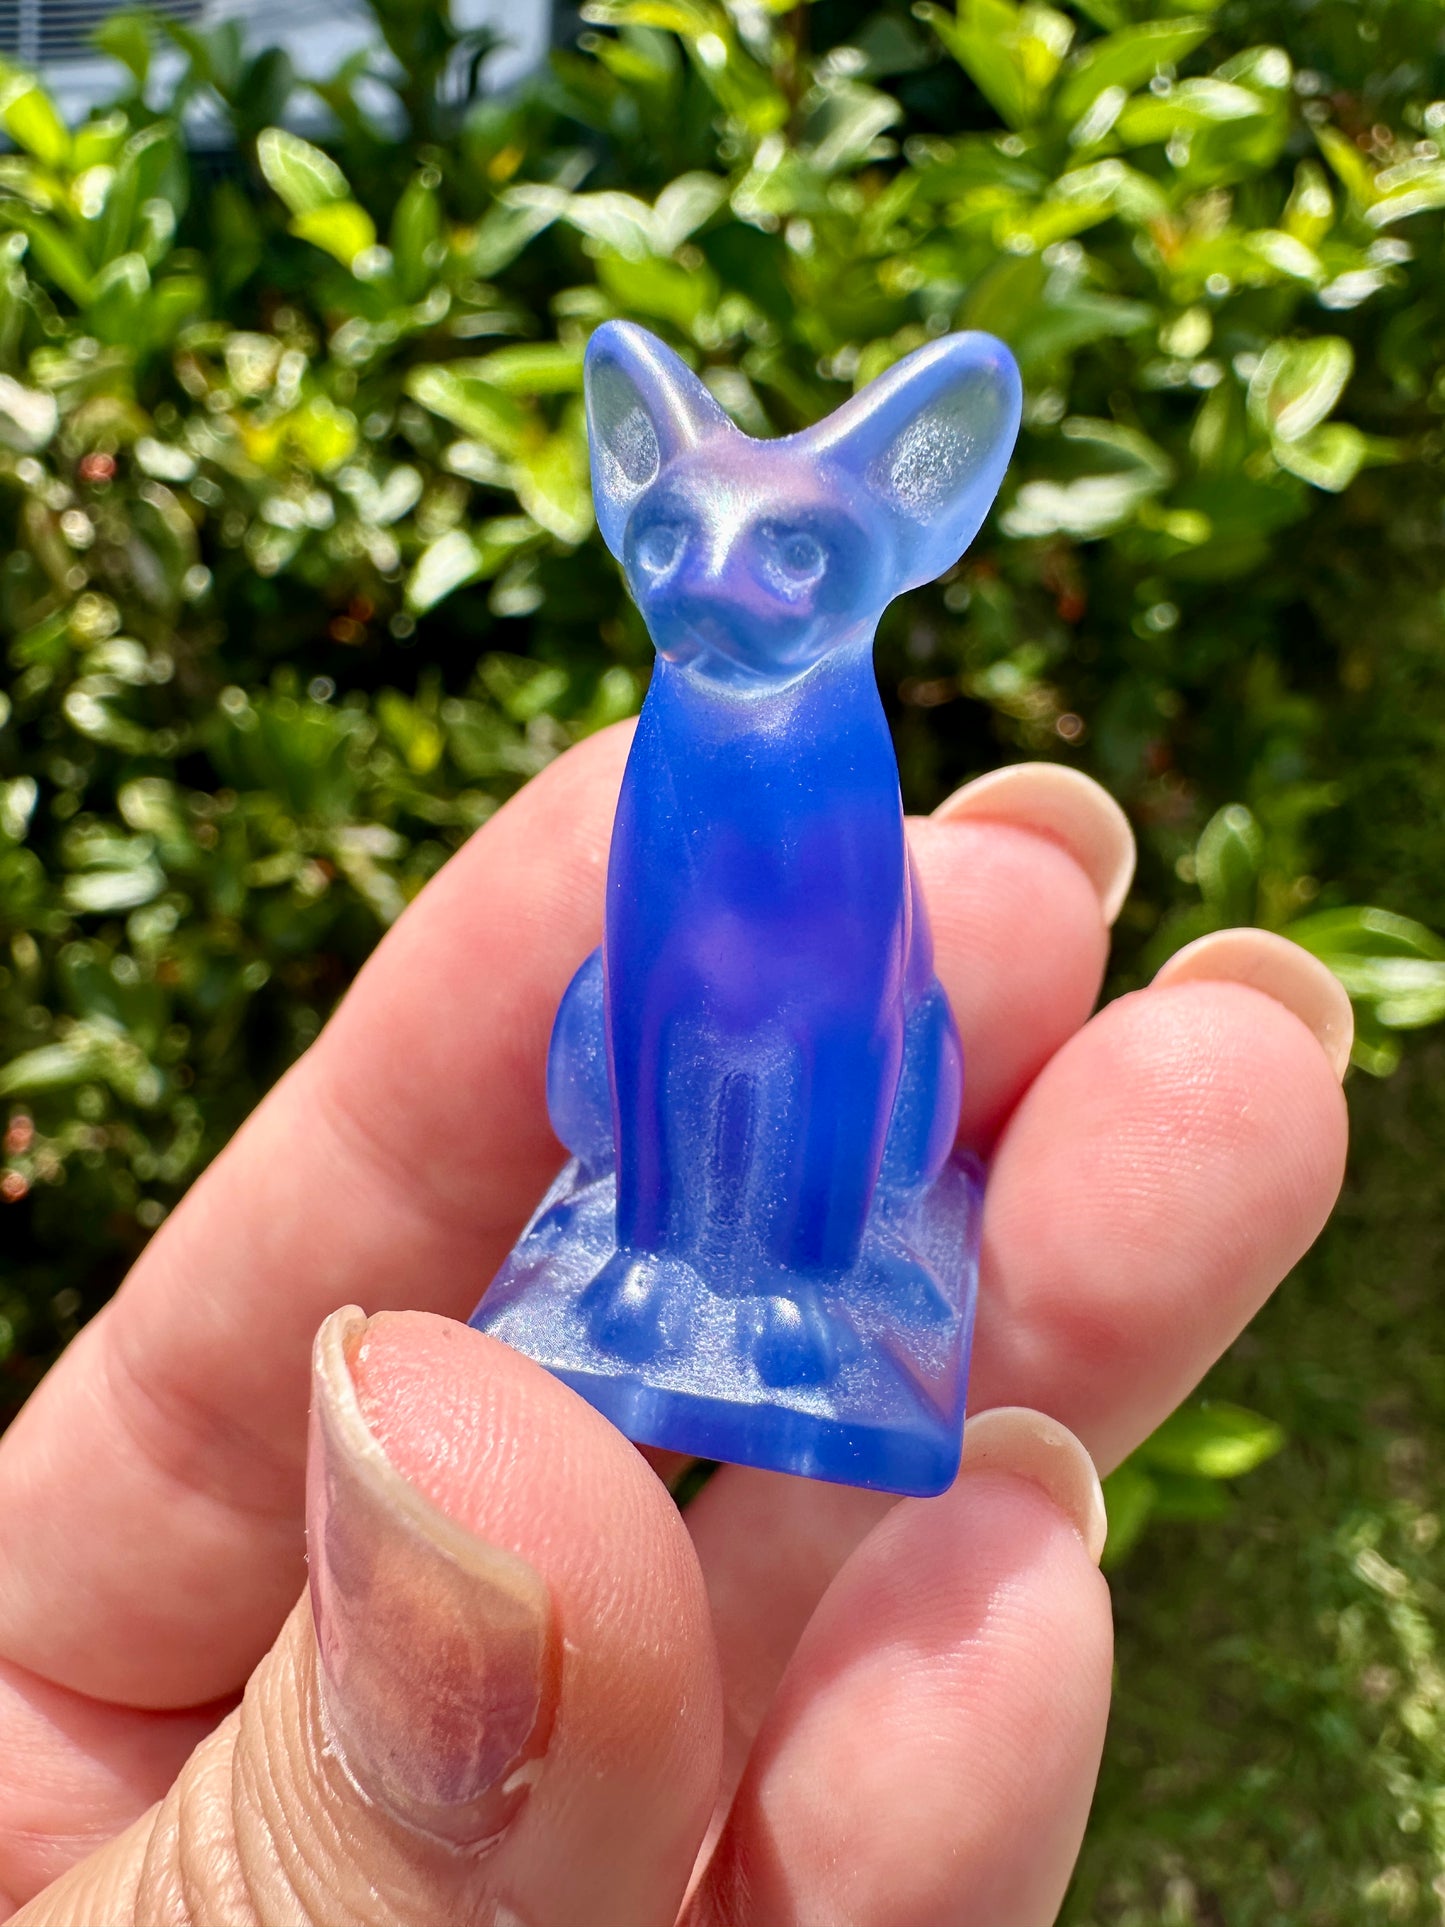 Blue Opalite Sphinx Cat Carving - Enchanting Gemstone Cat Figurine, Unique Home Decor and Gift Idea for Cat Aficionados and Gem Collectors